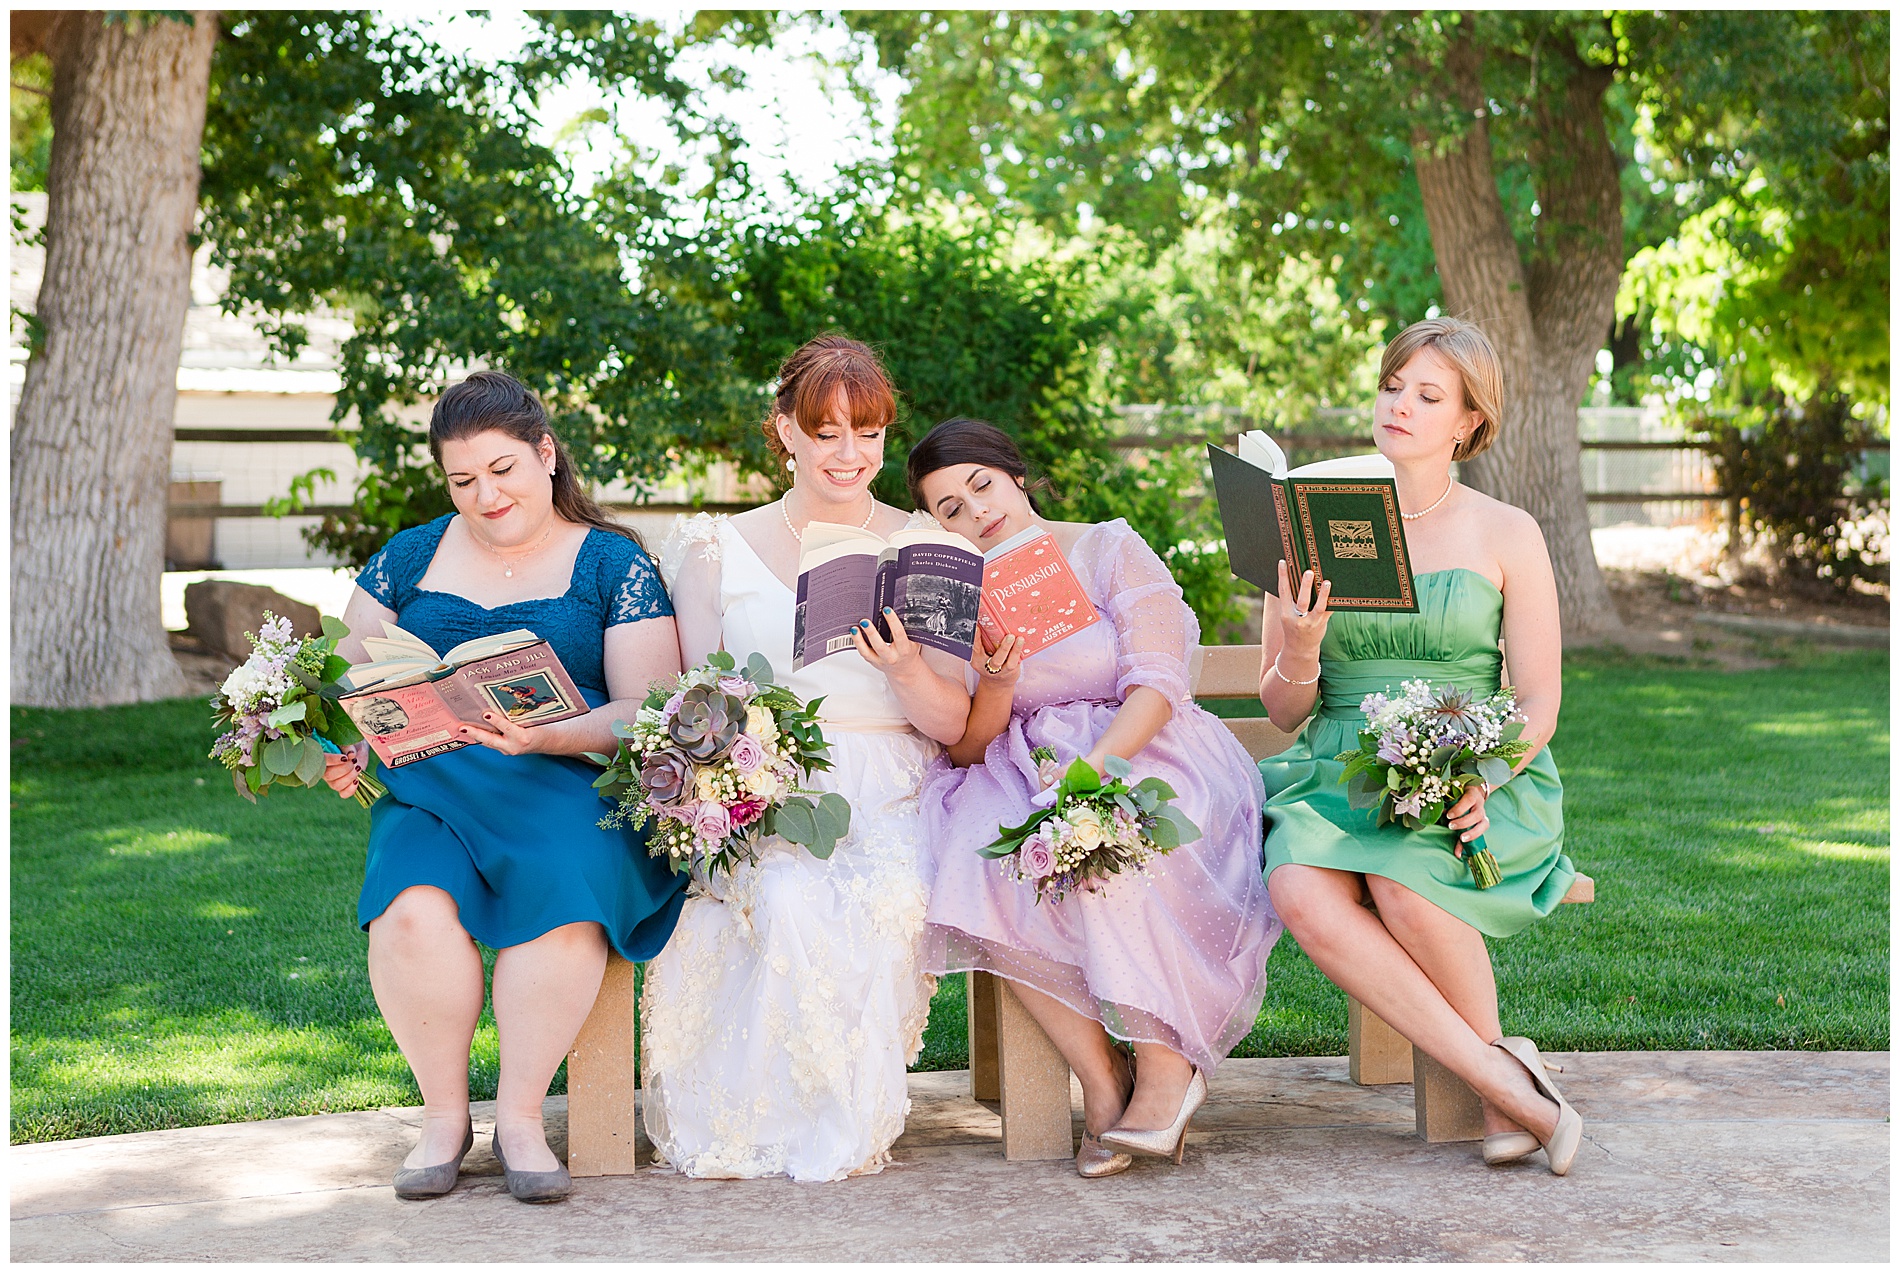 Bookworm bridal party portraits | Idaho wedding photographer | Robin Wheeler Photography